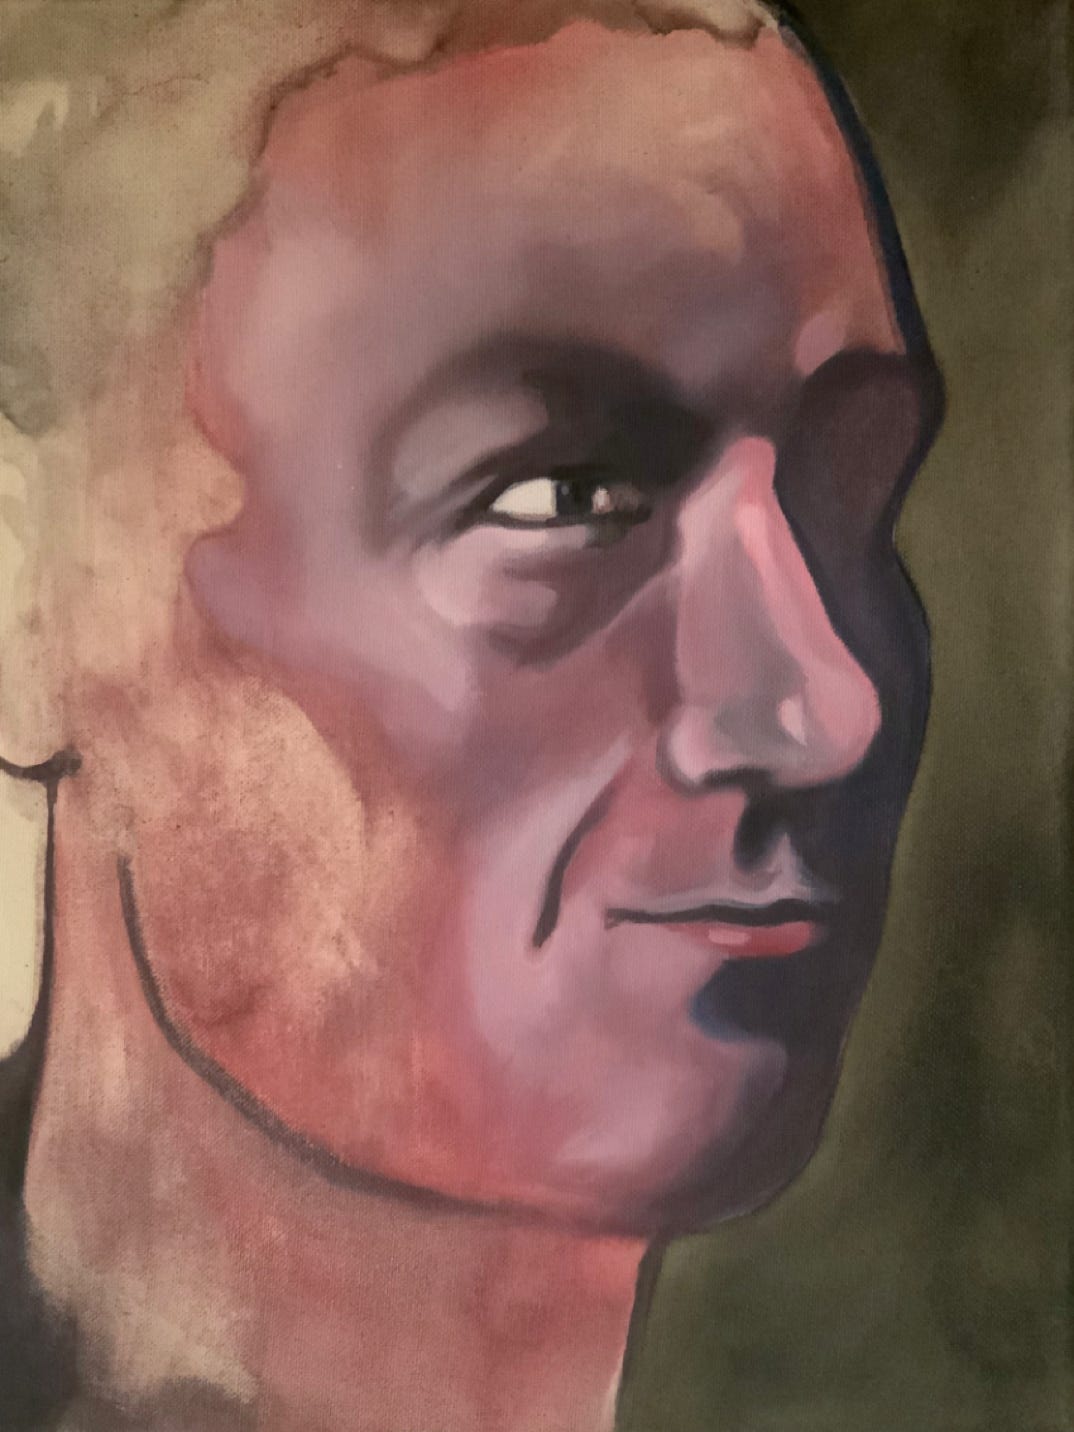 40x30 cm, oil on canvas, 2020